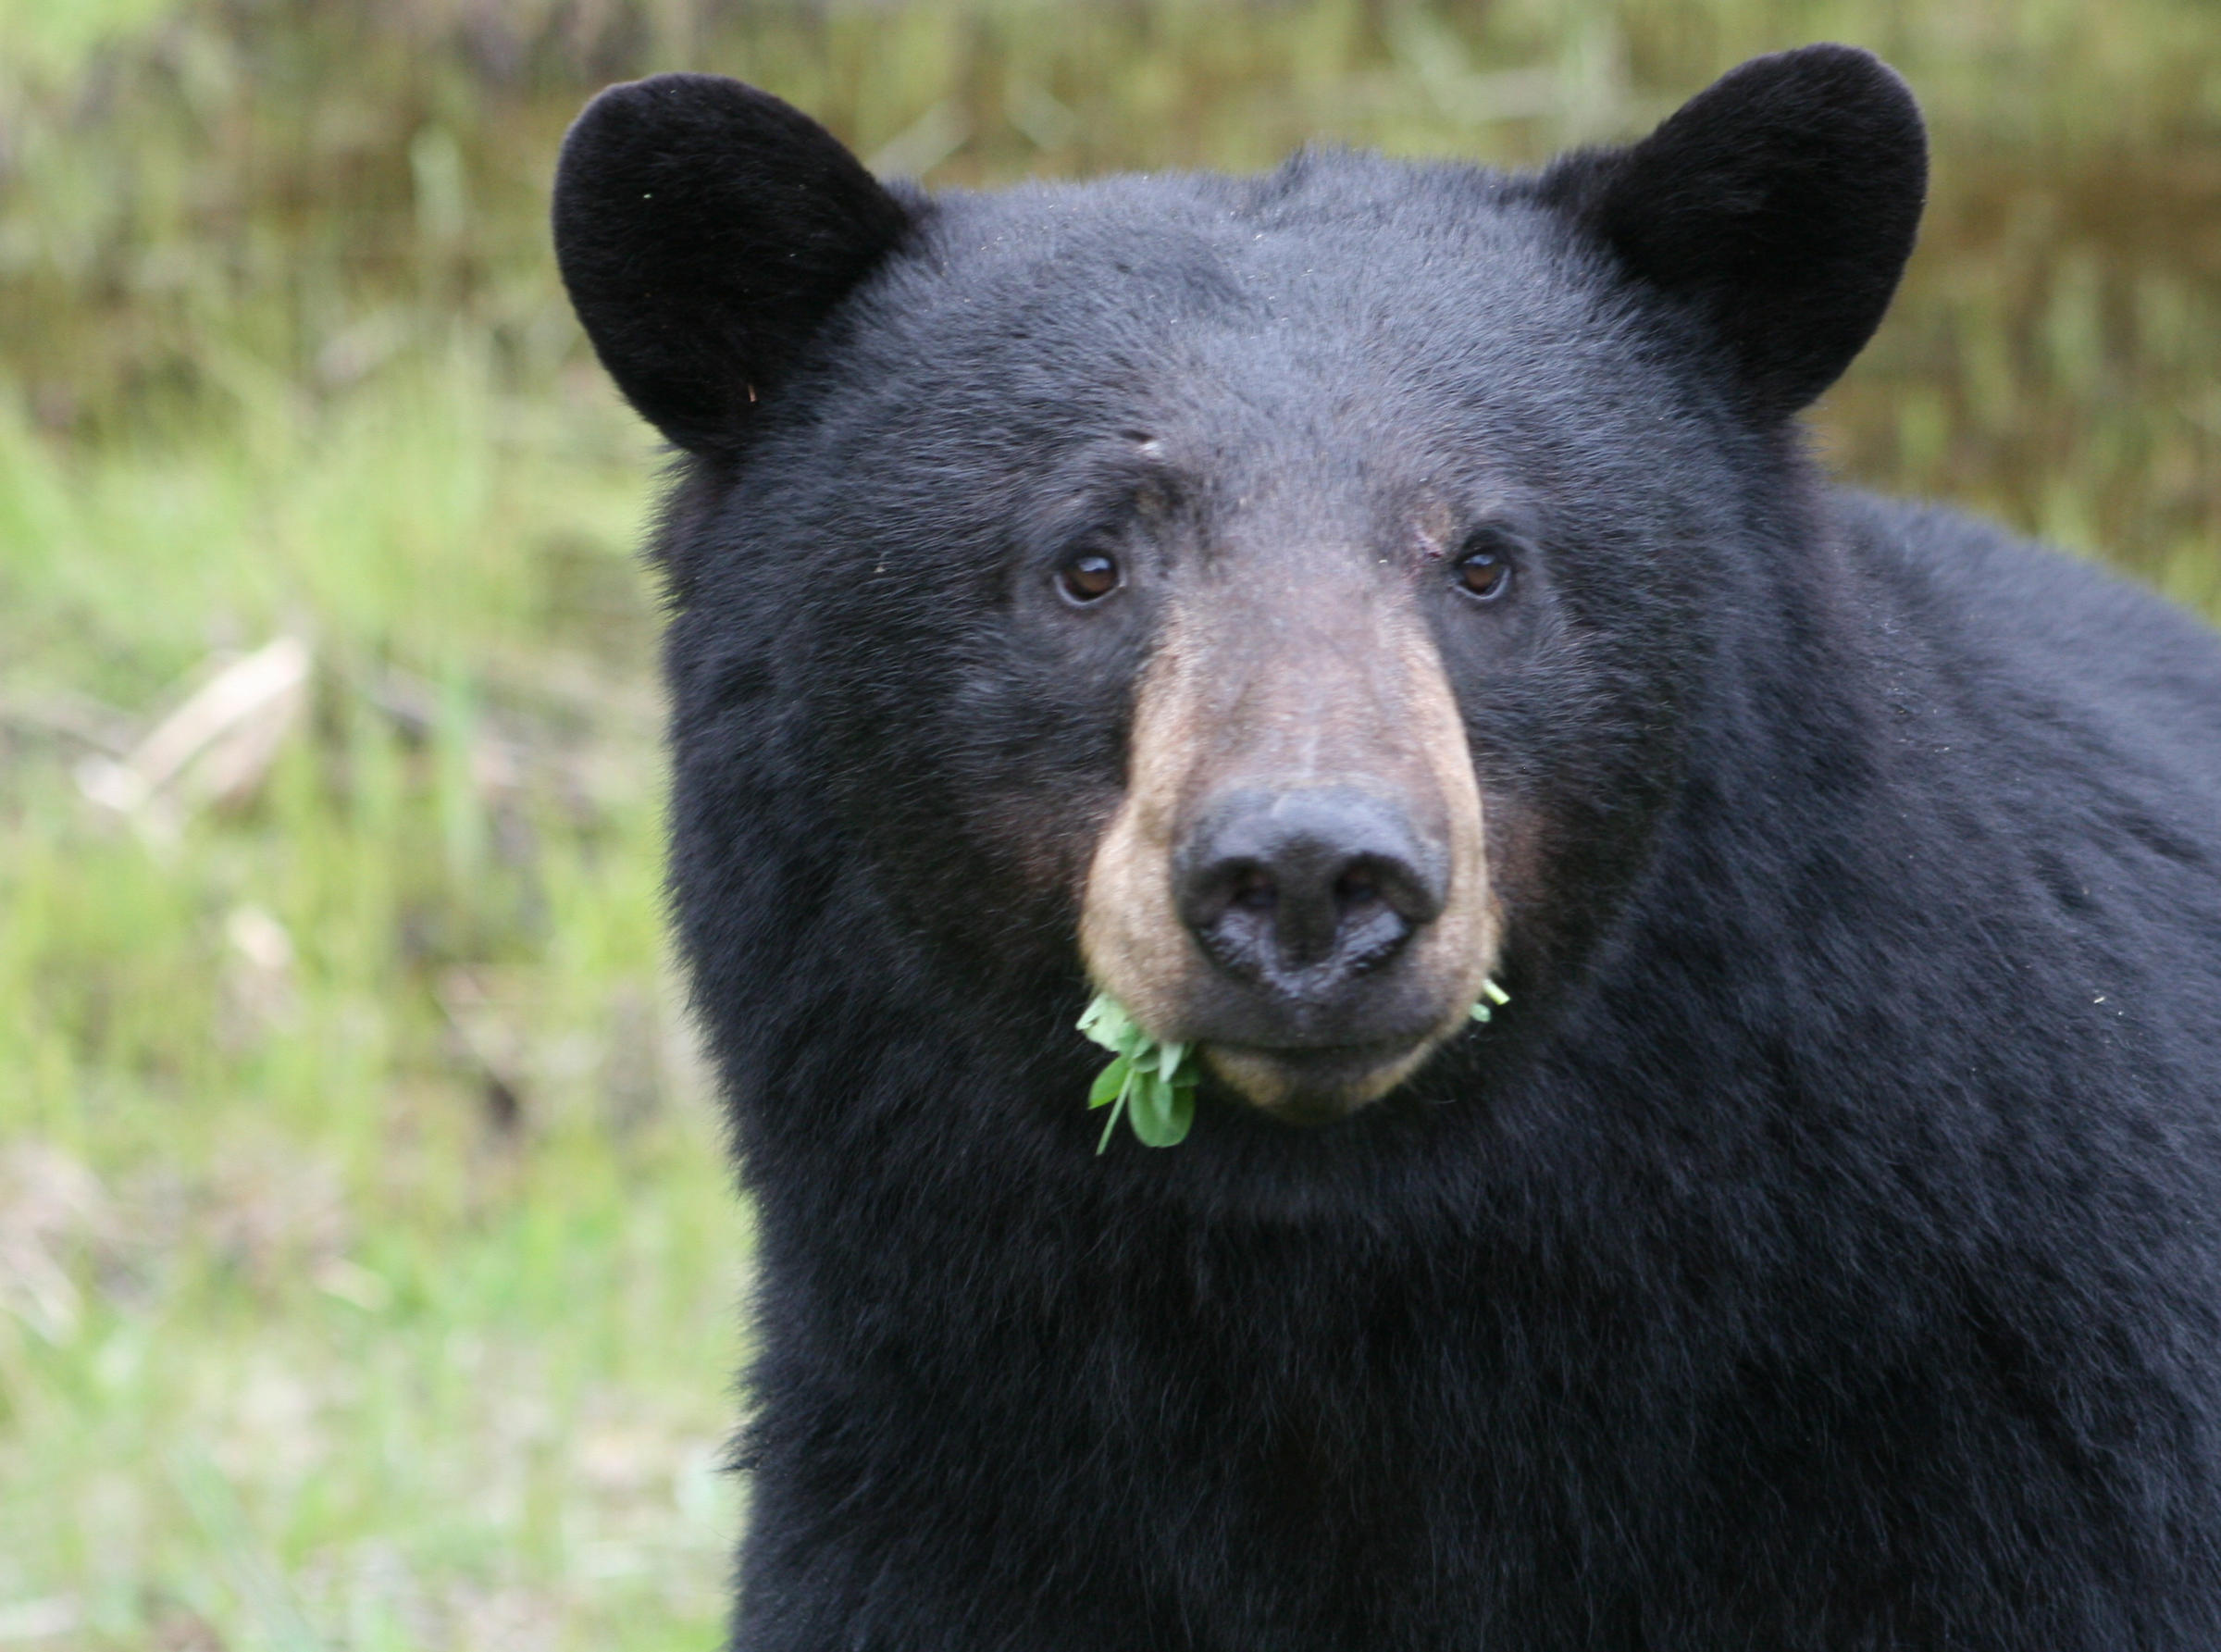 To avoid encounters with black bears, remove bird feeders | Michigan ...